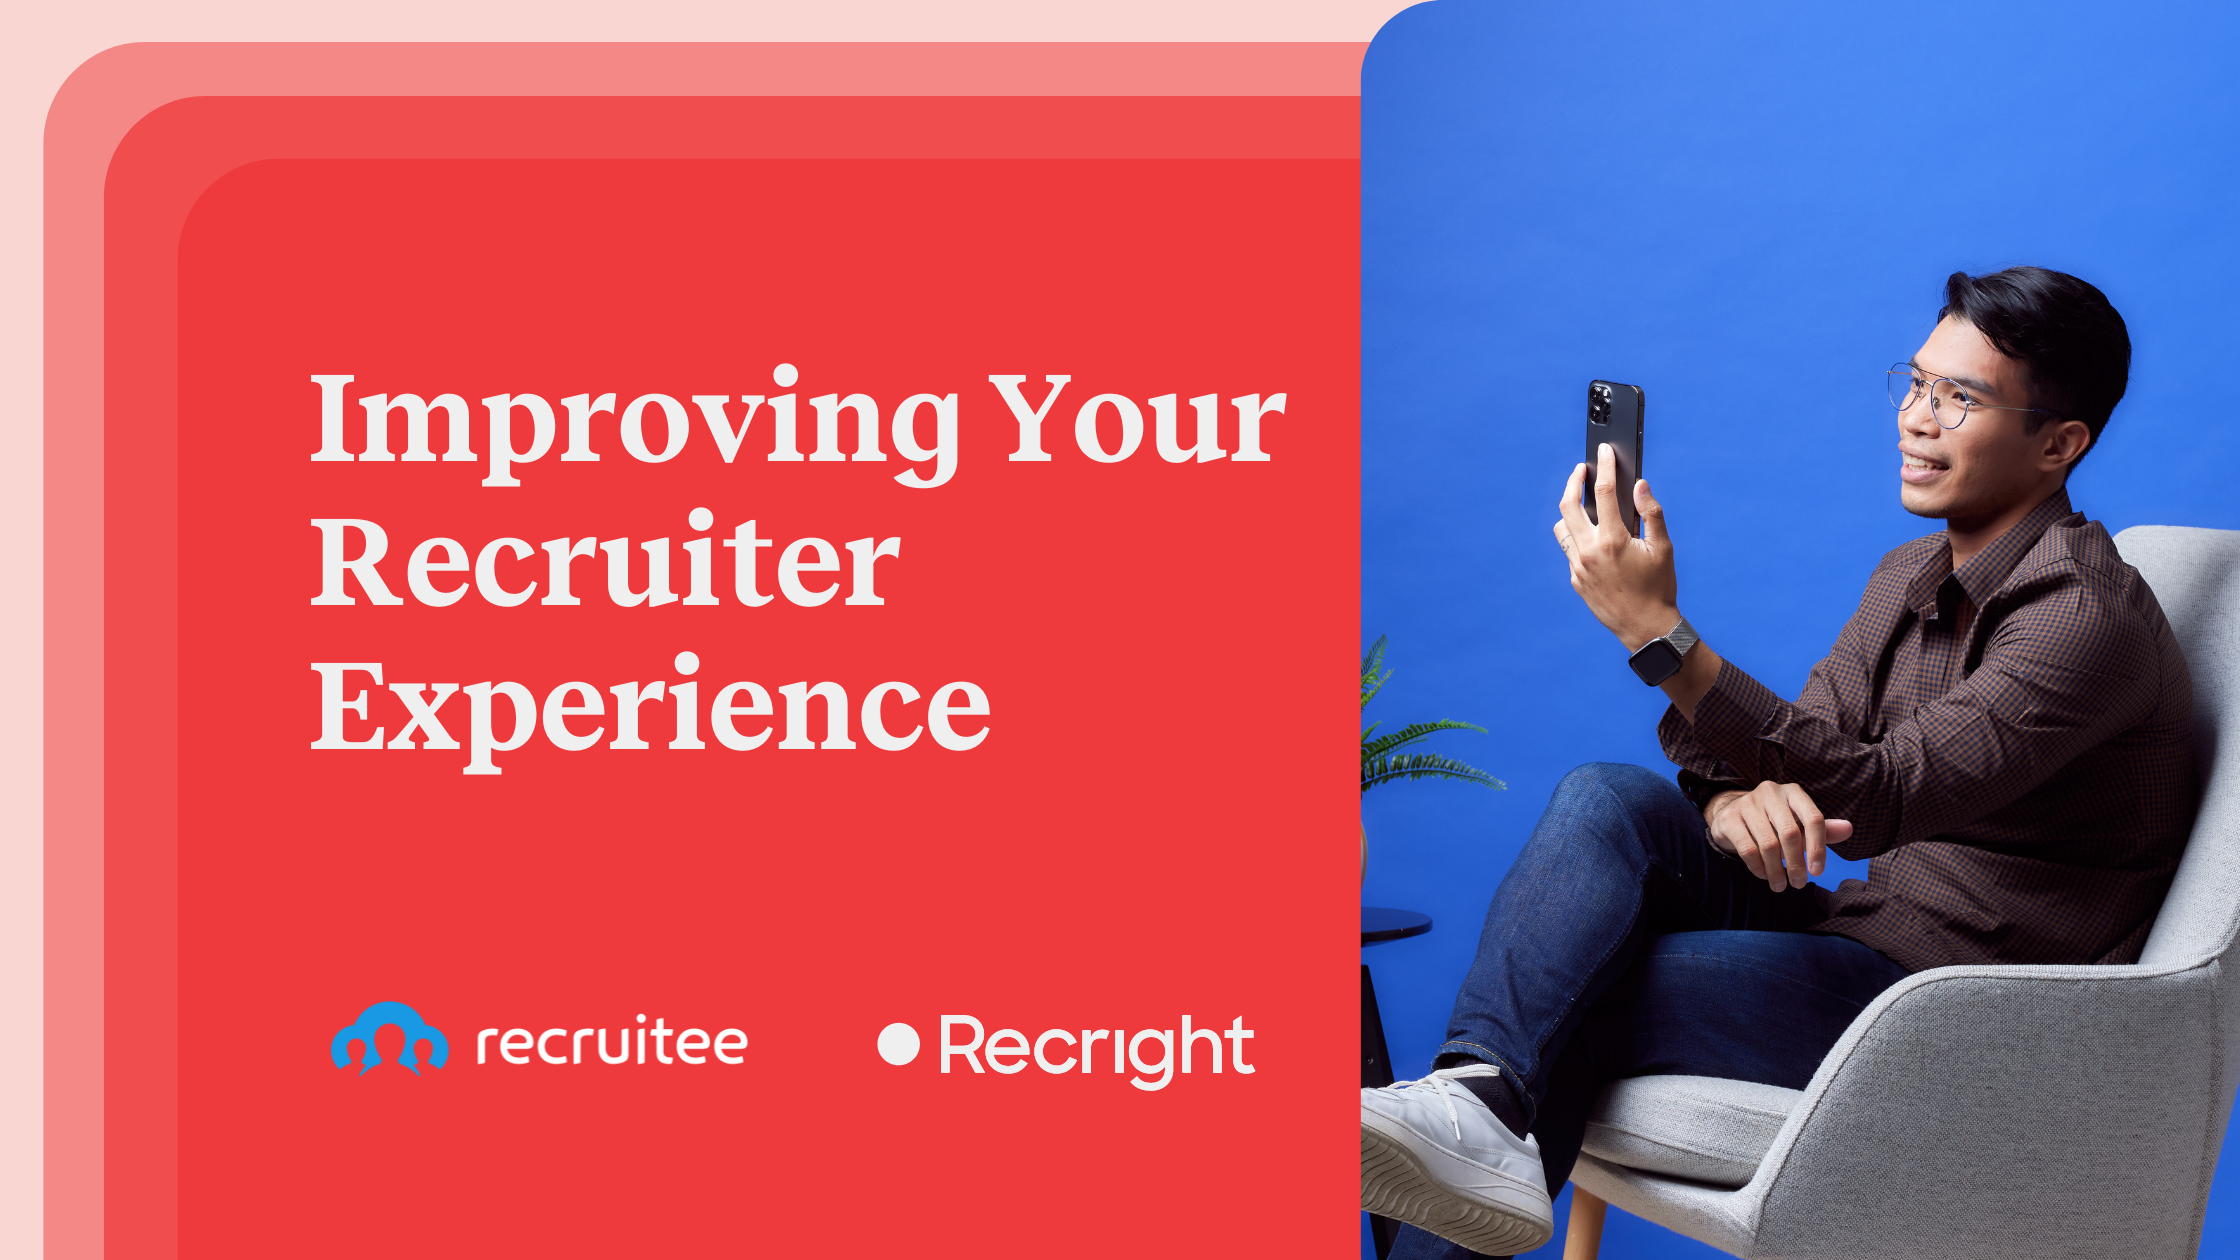 Recright Recruitee Improving Your Recruiter Experience